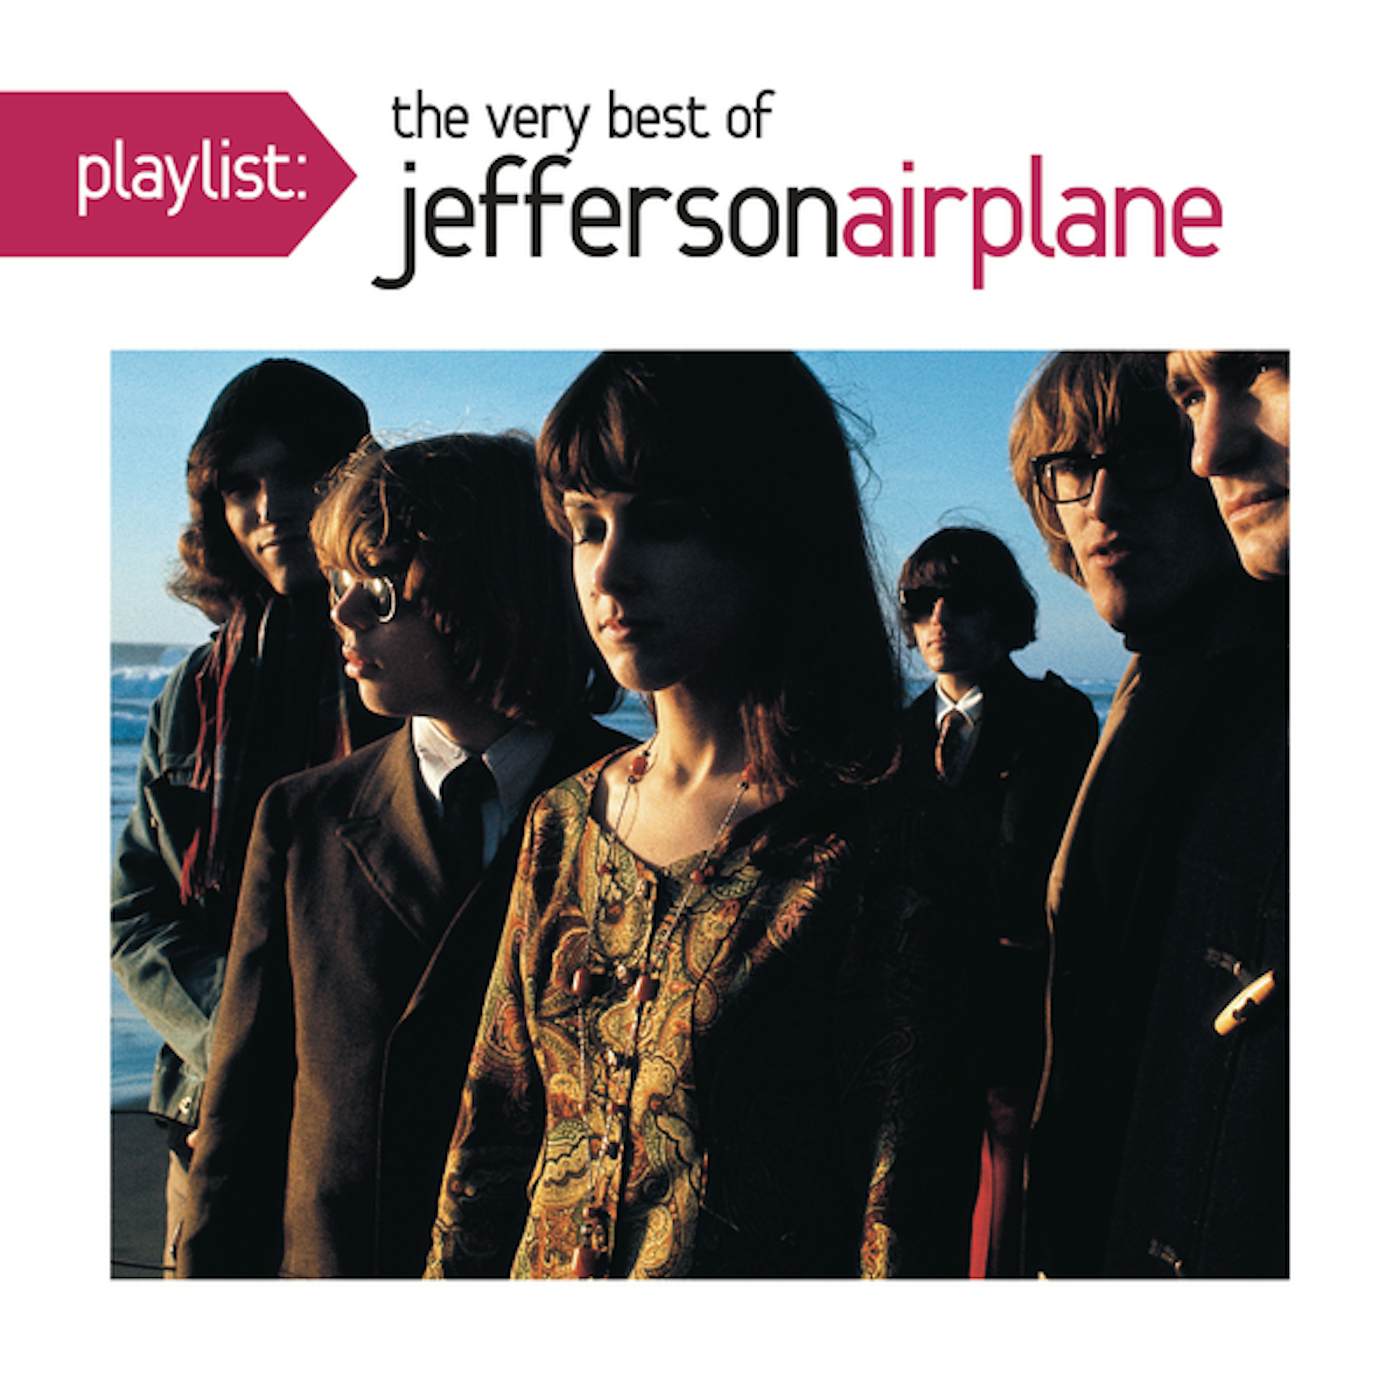 PLAYLIST: VERY BEST OF JEFFERSON AIRPLANE CD